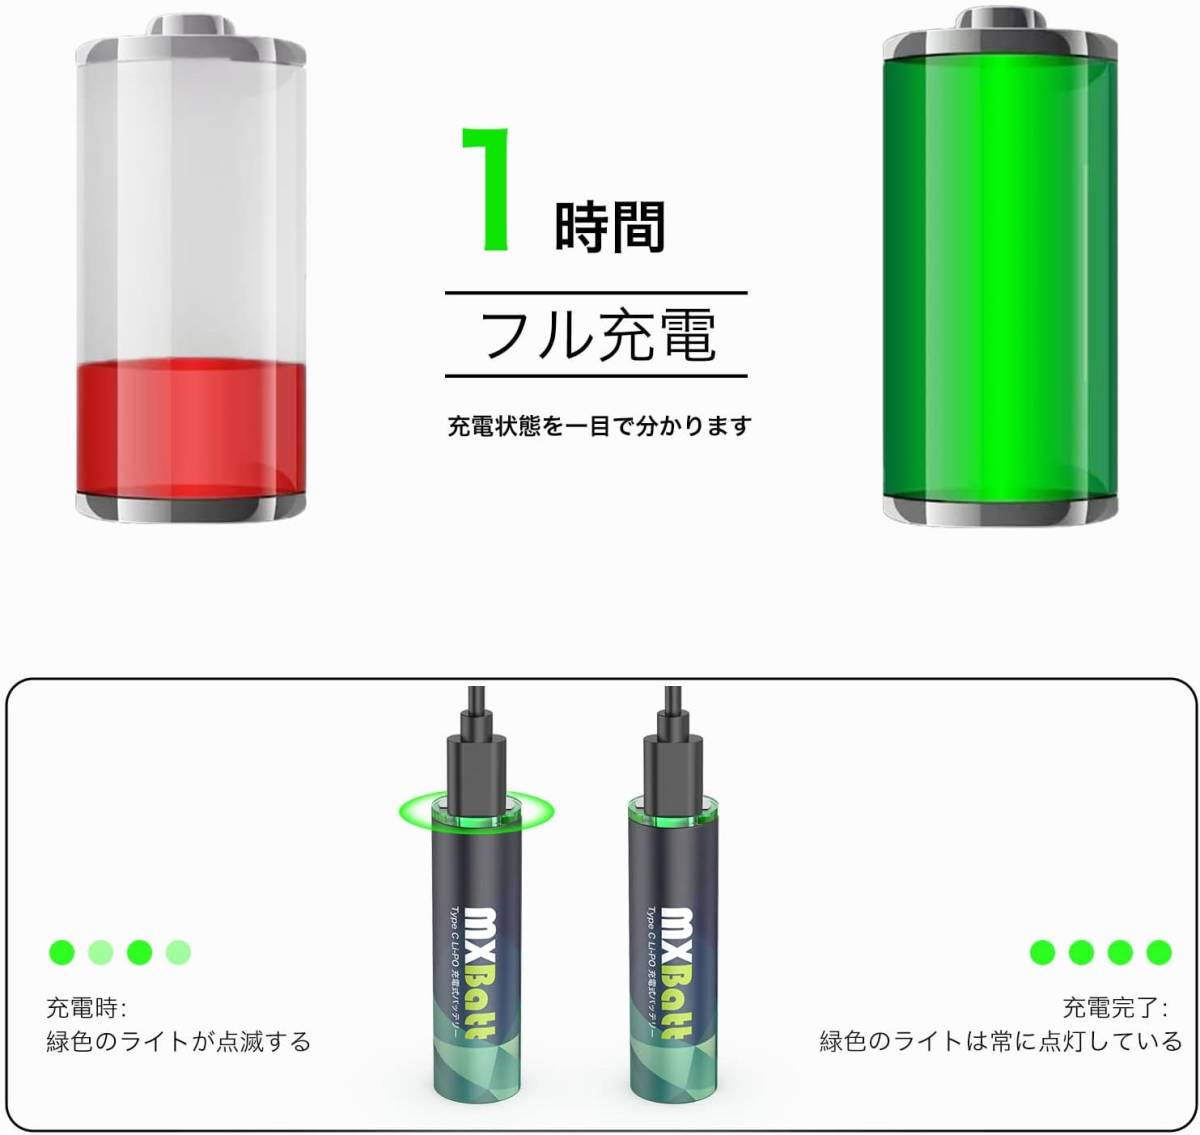  одиночный 3 перезаряжаемая батарея 4шт.@MXBatt lithium ион перезаряжаемая батарея 1.5V перезаряжаемая батарея одиночный 3 форма заряжающийся AA lithium батарейка 3400mWh защита схема есть 